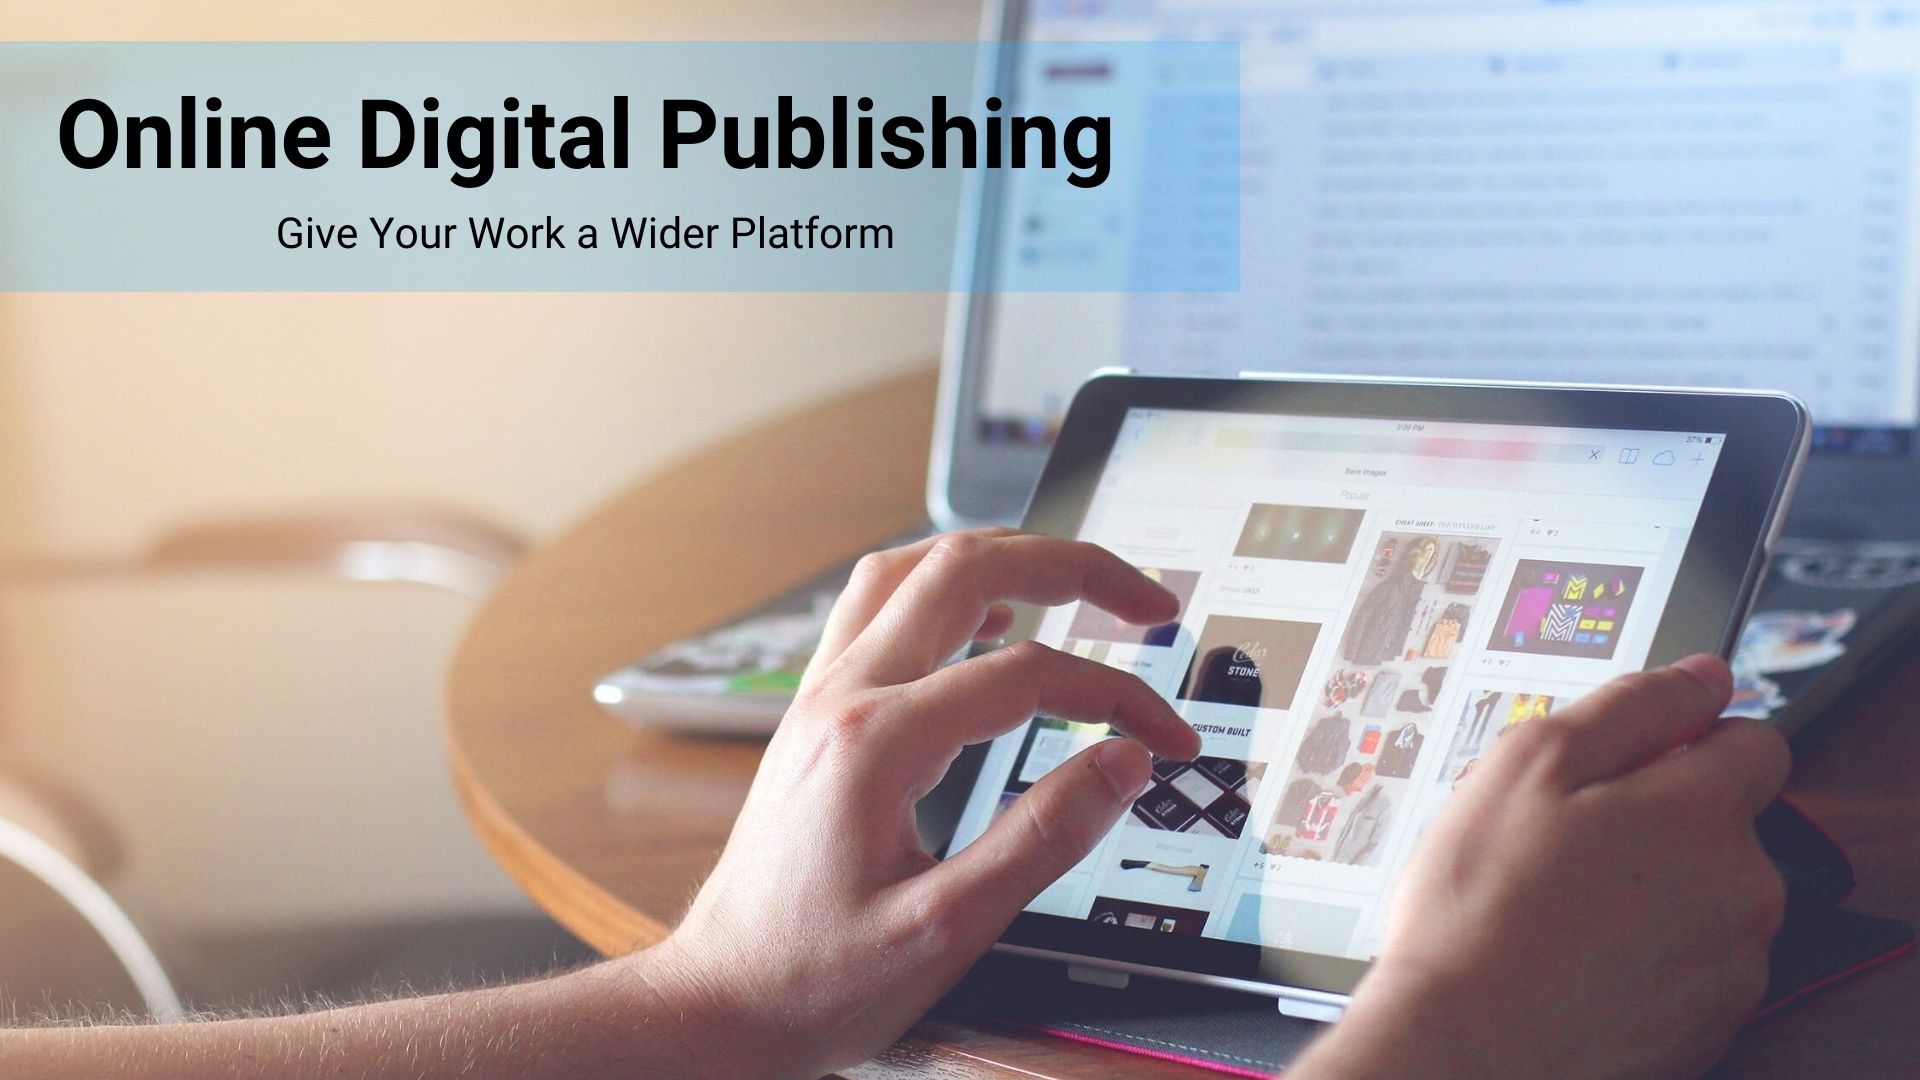 Online Digital Publishing Benefits